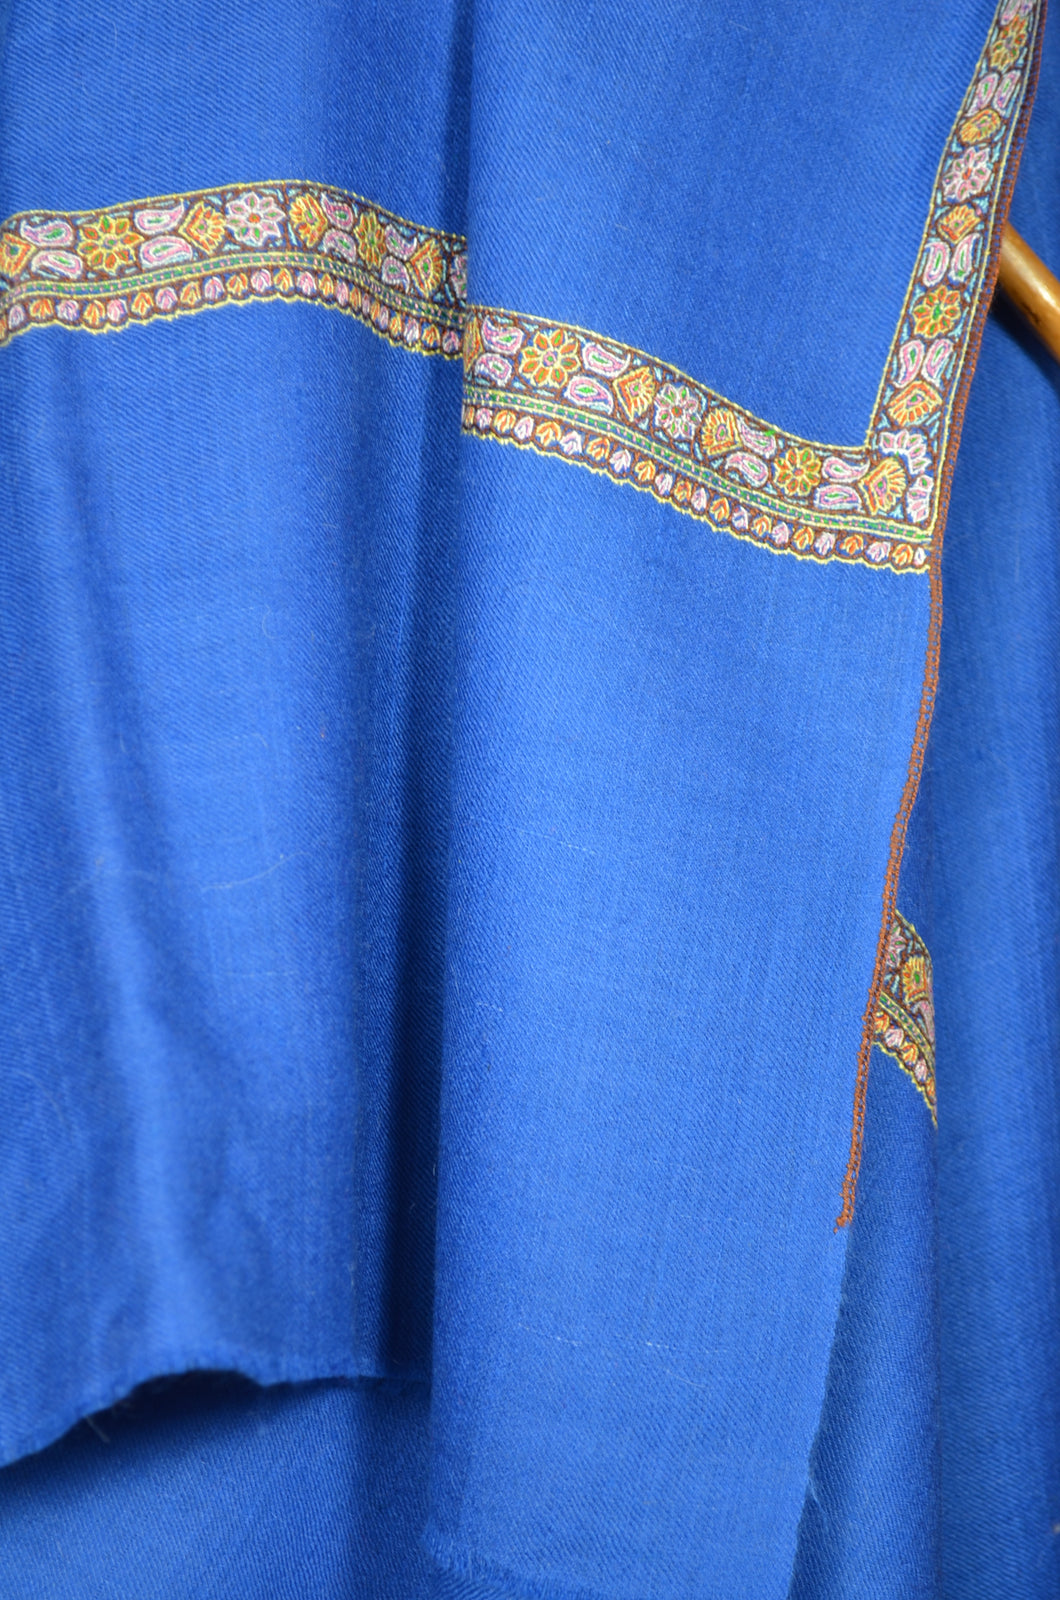 Royal Blue Border Embroidery Cashmere Pashmina Shawl